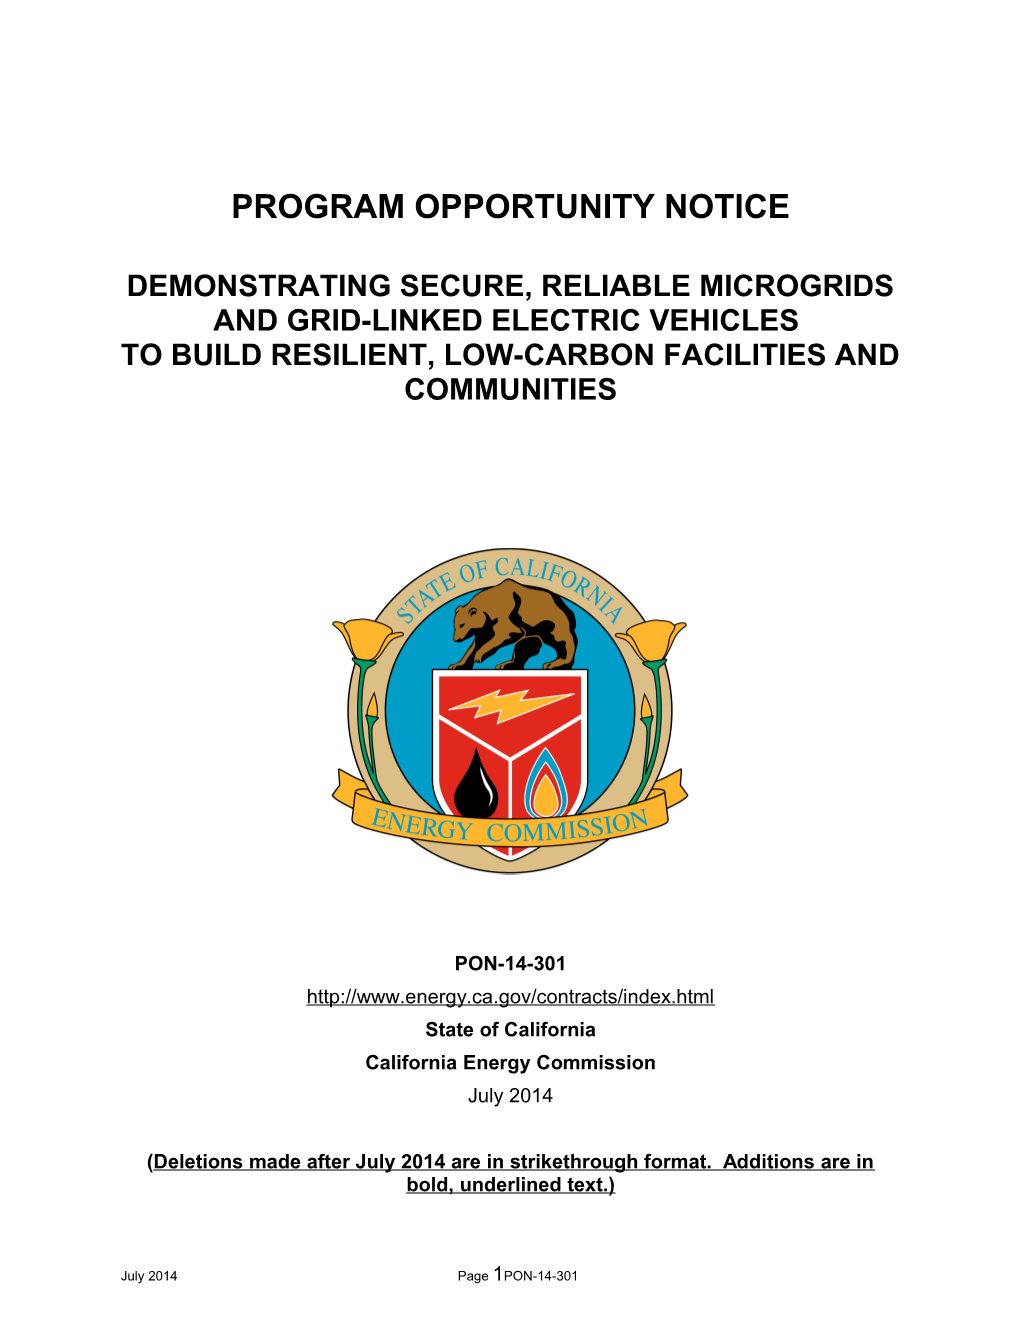 Program Opportunity Notice